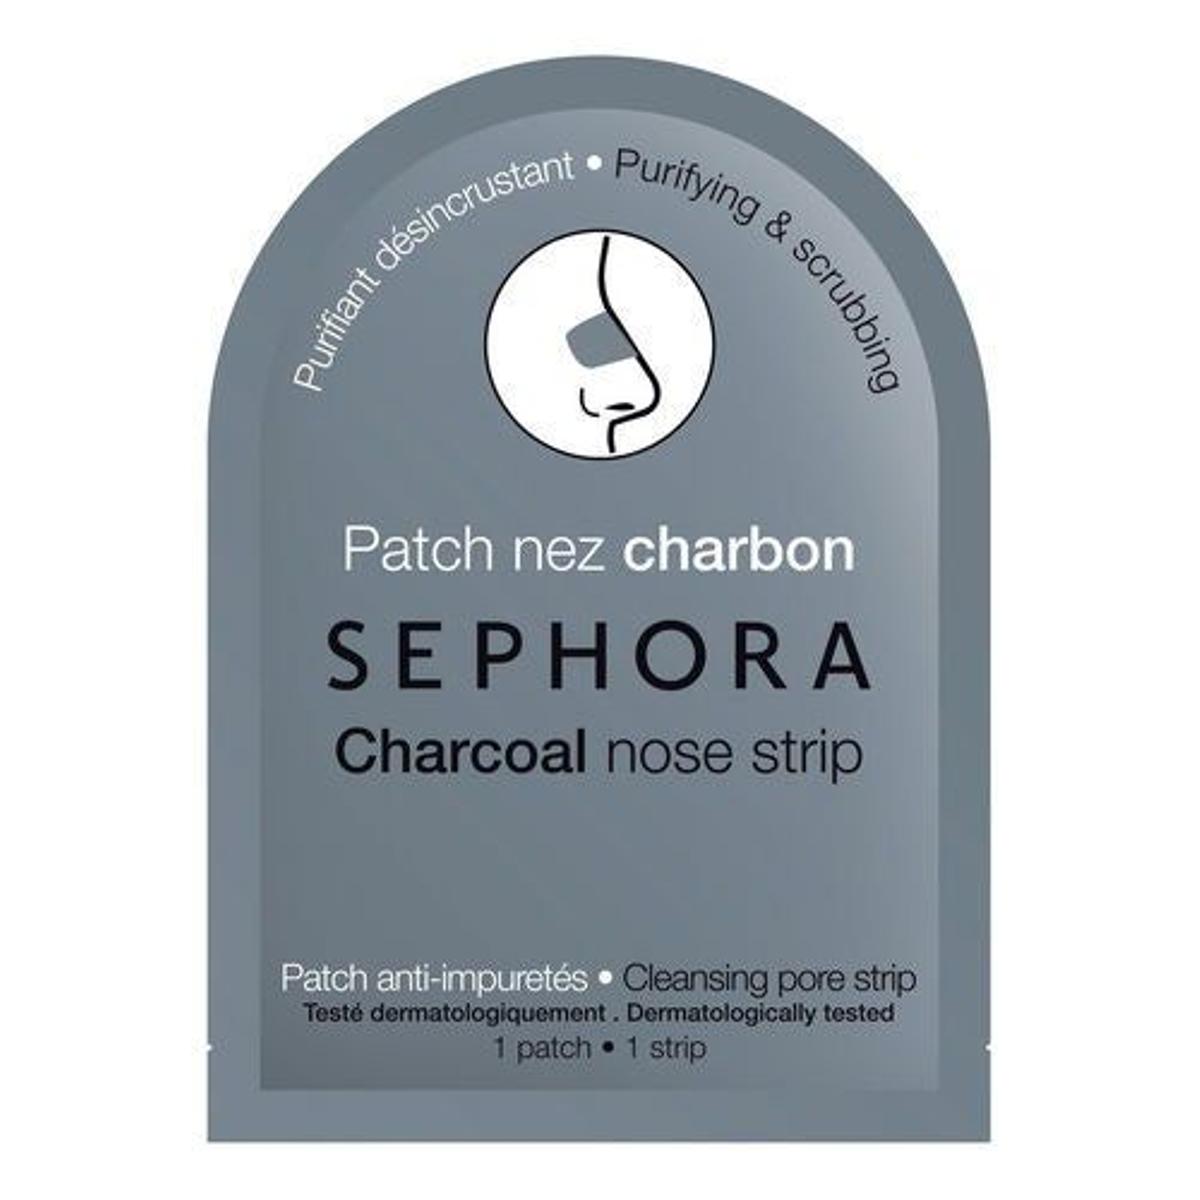 Parche purificante de nariz de Sephora